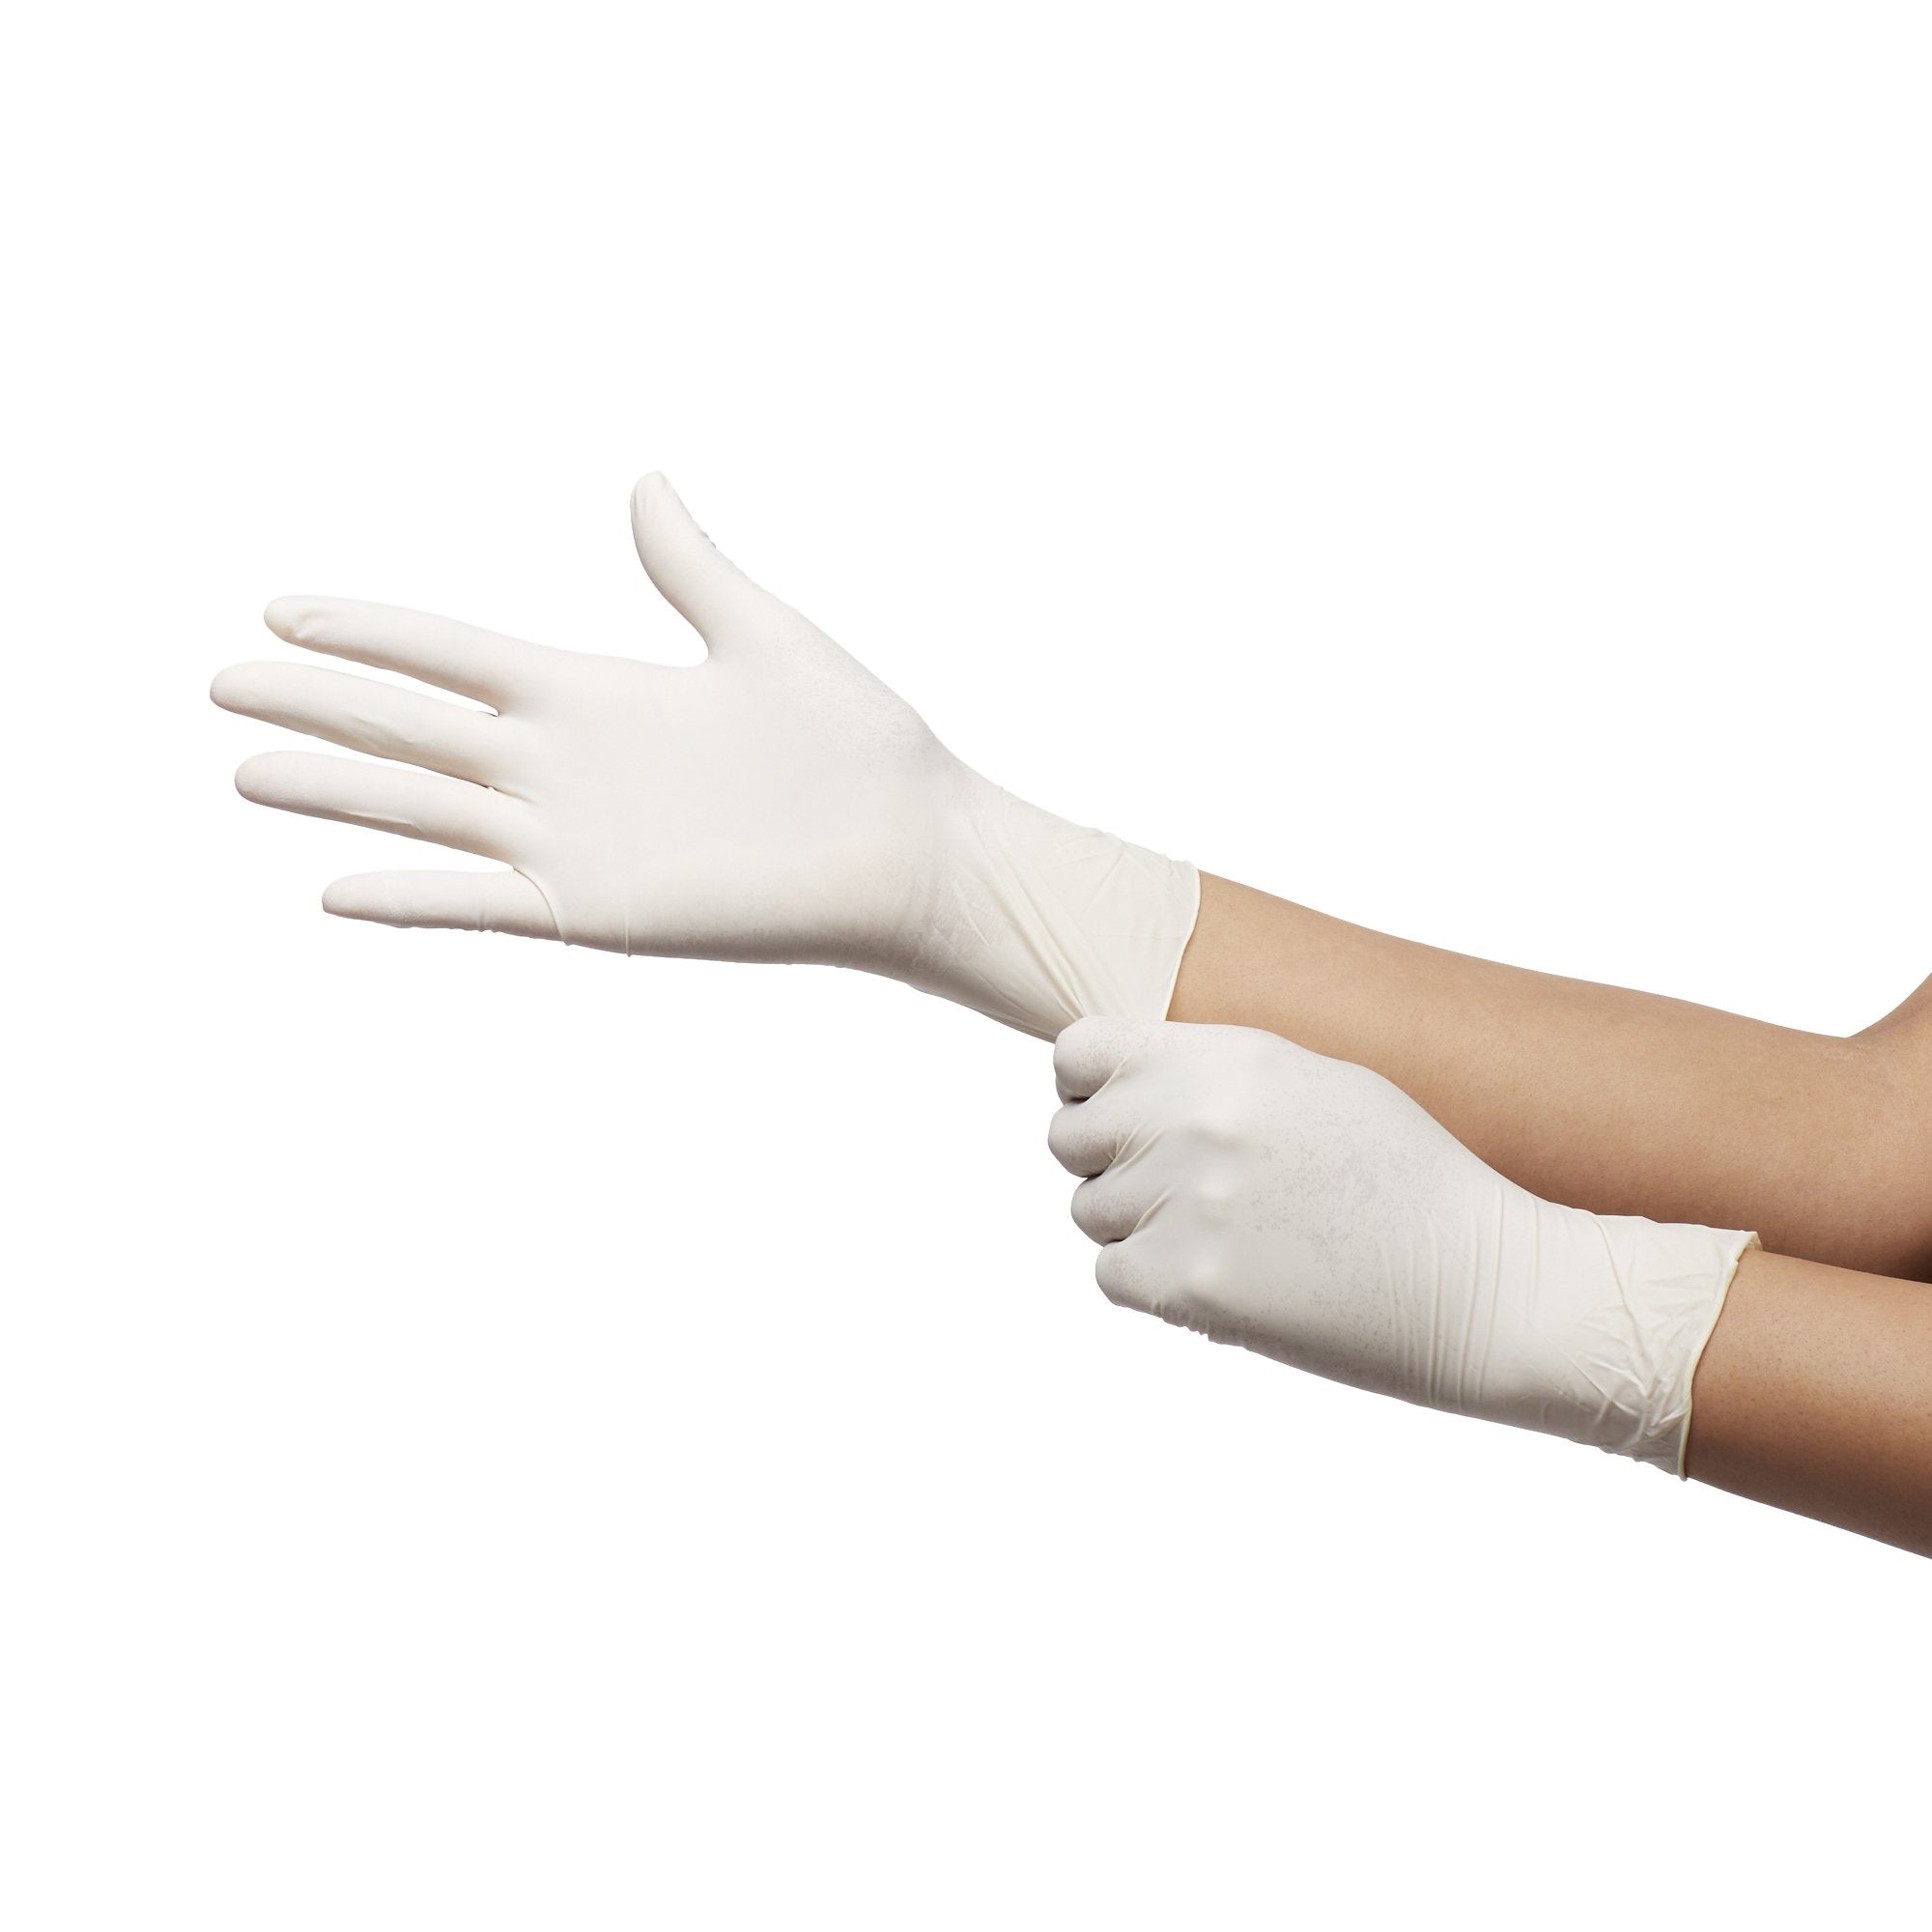 McKesson Confiderm Latex Exam Gloves, Small Ivory - 1000 Pack, Textured Grip